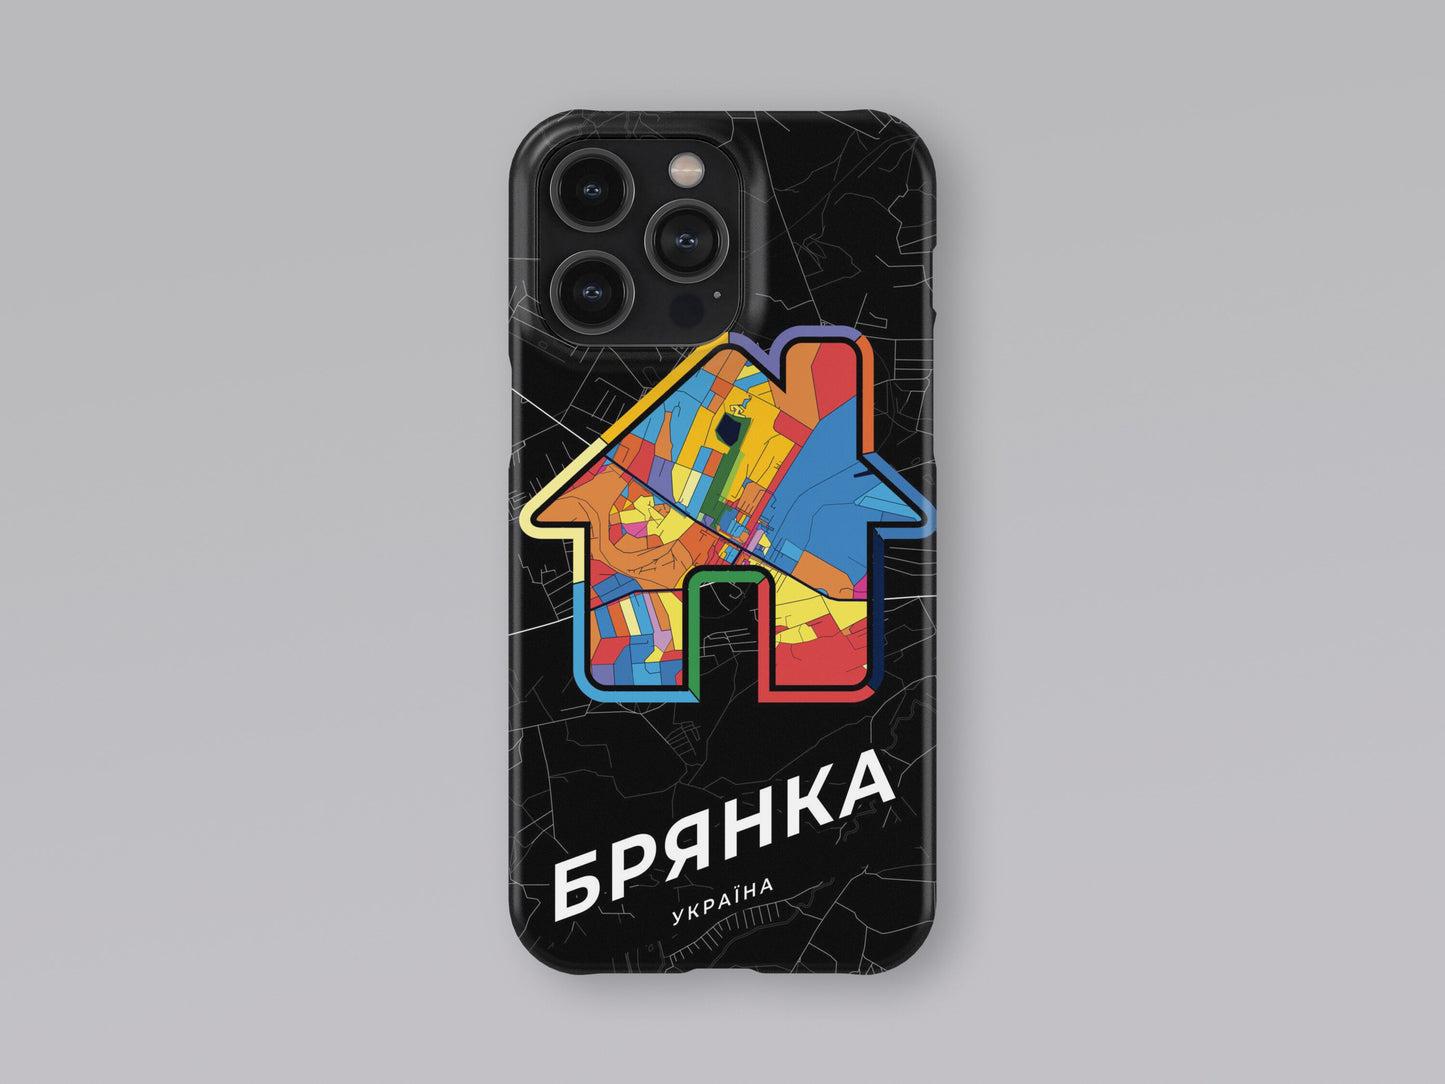 Brianka Ukraine slim phone case with colorful icon. Birthday, wedding or housewarming gift. Couple match cases. 3